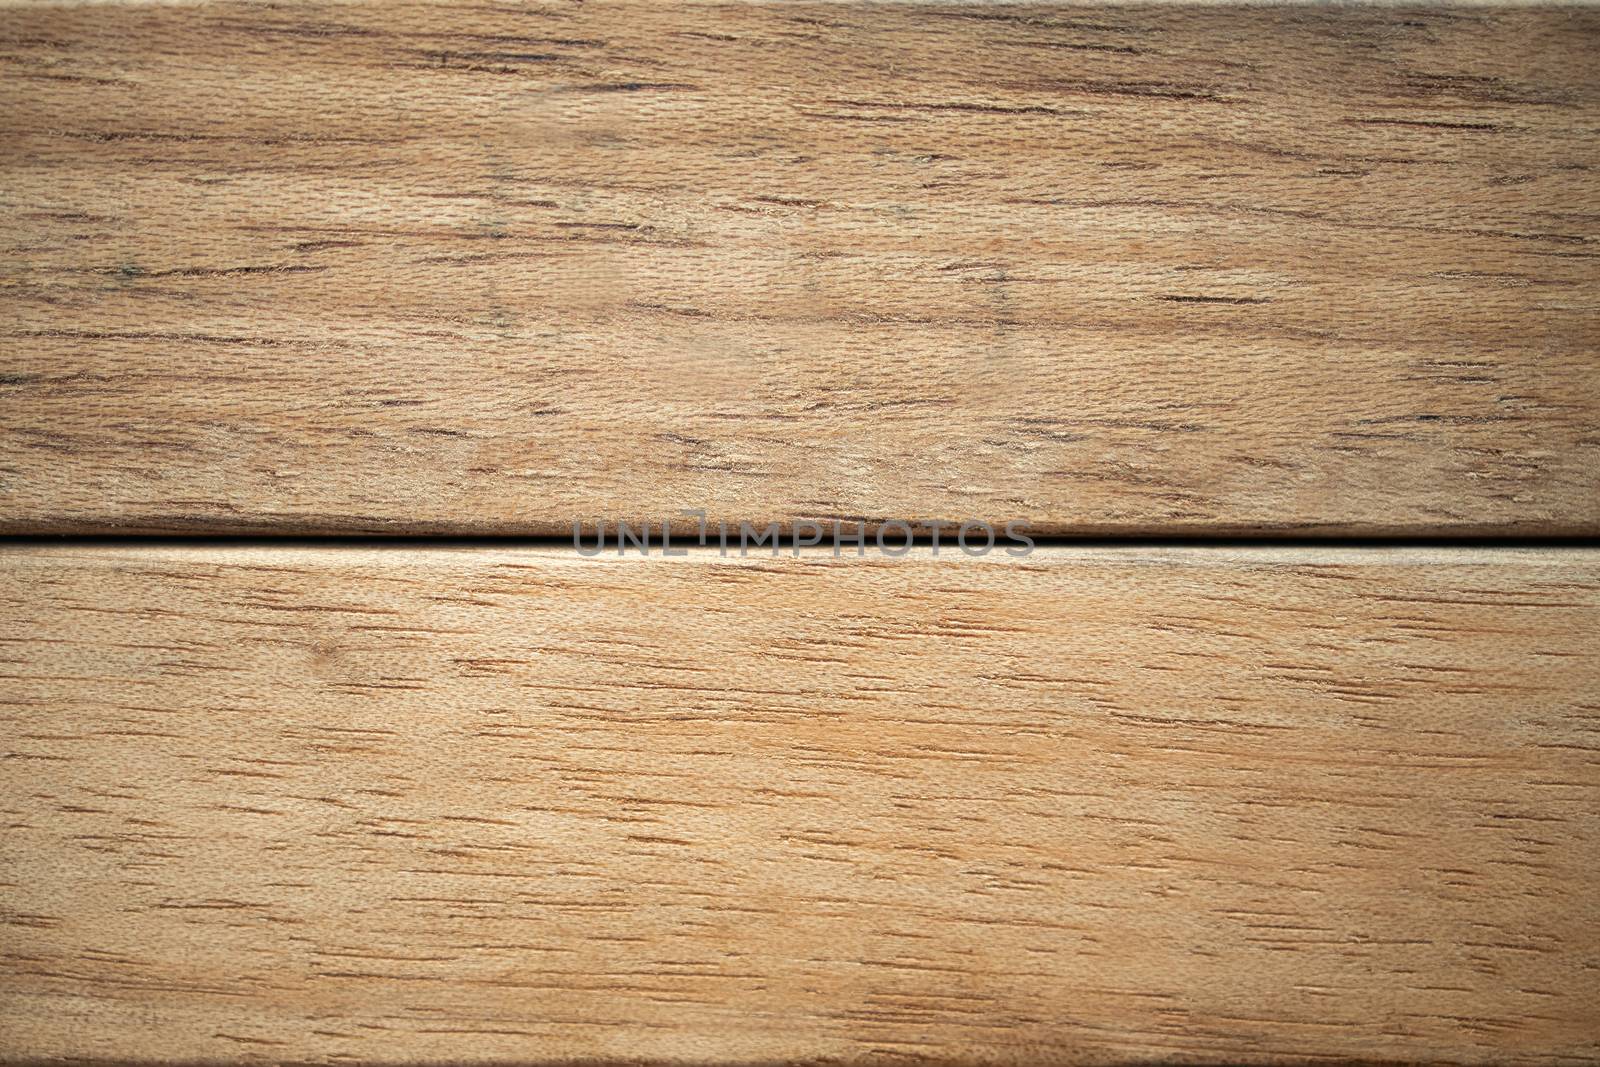 Wood plank textured background